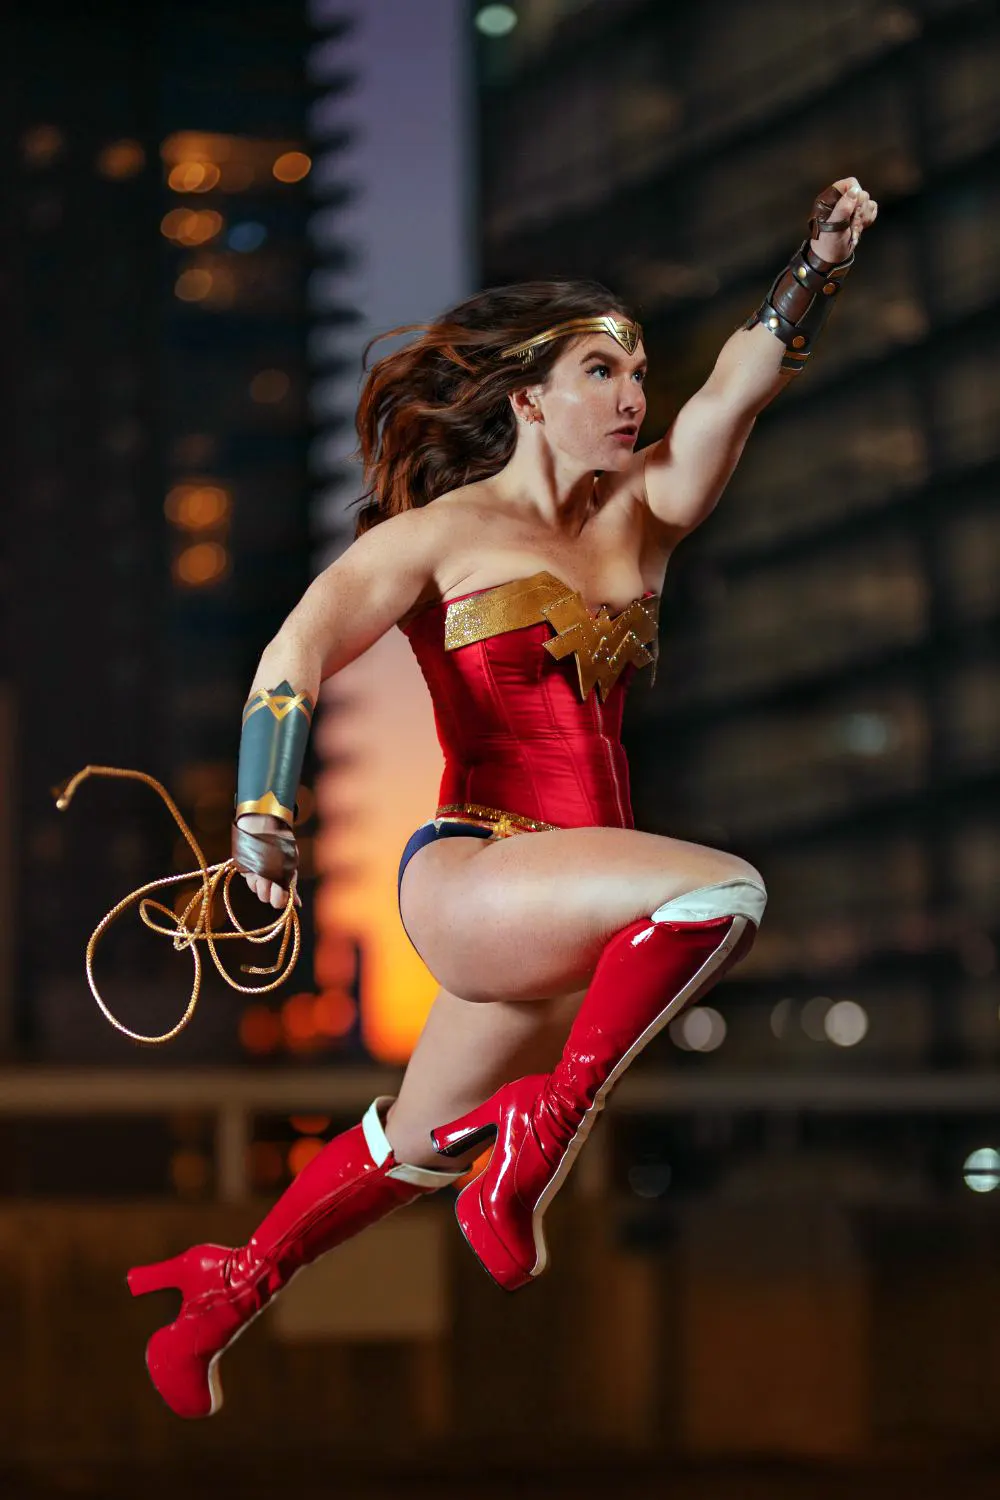 Superhero women wearing skimpy outfit